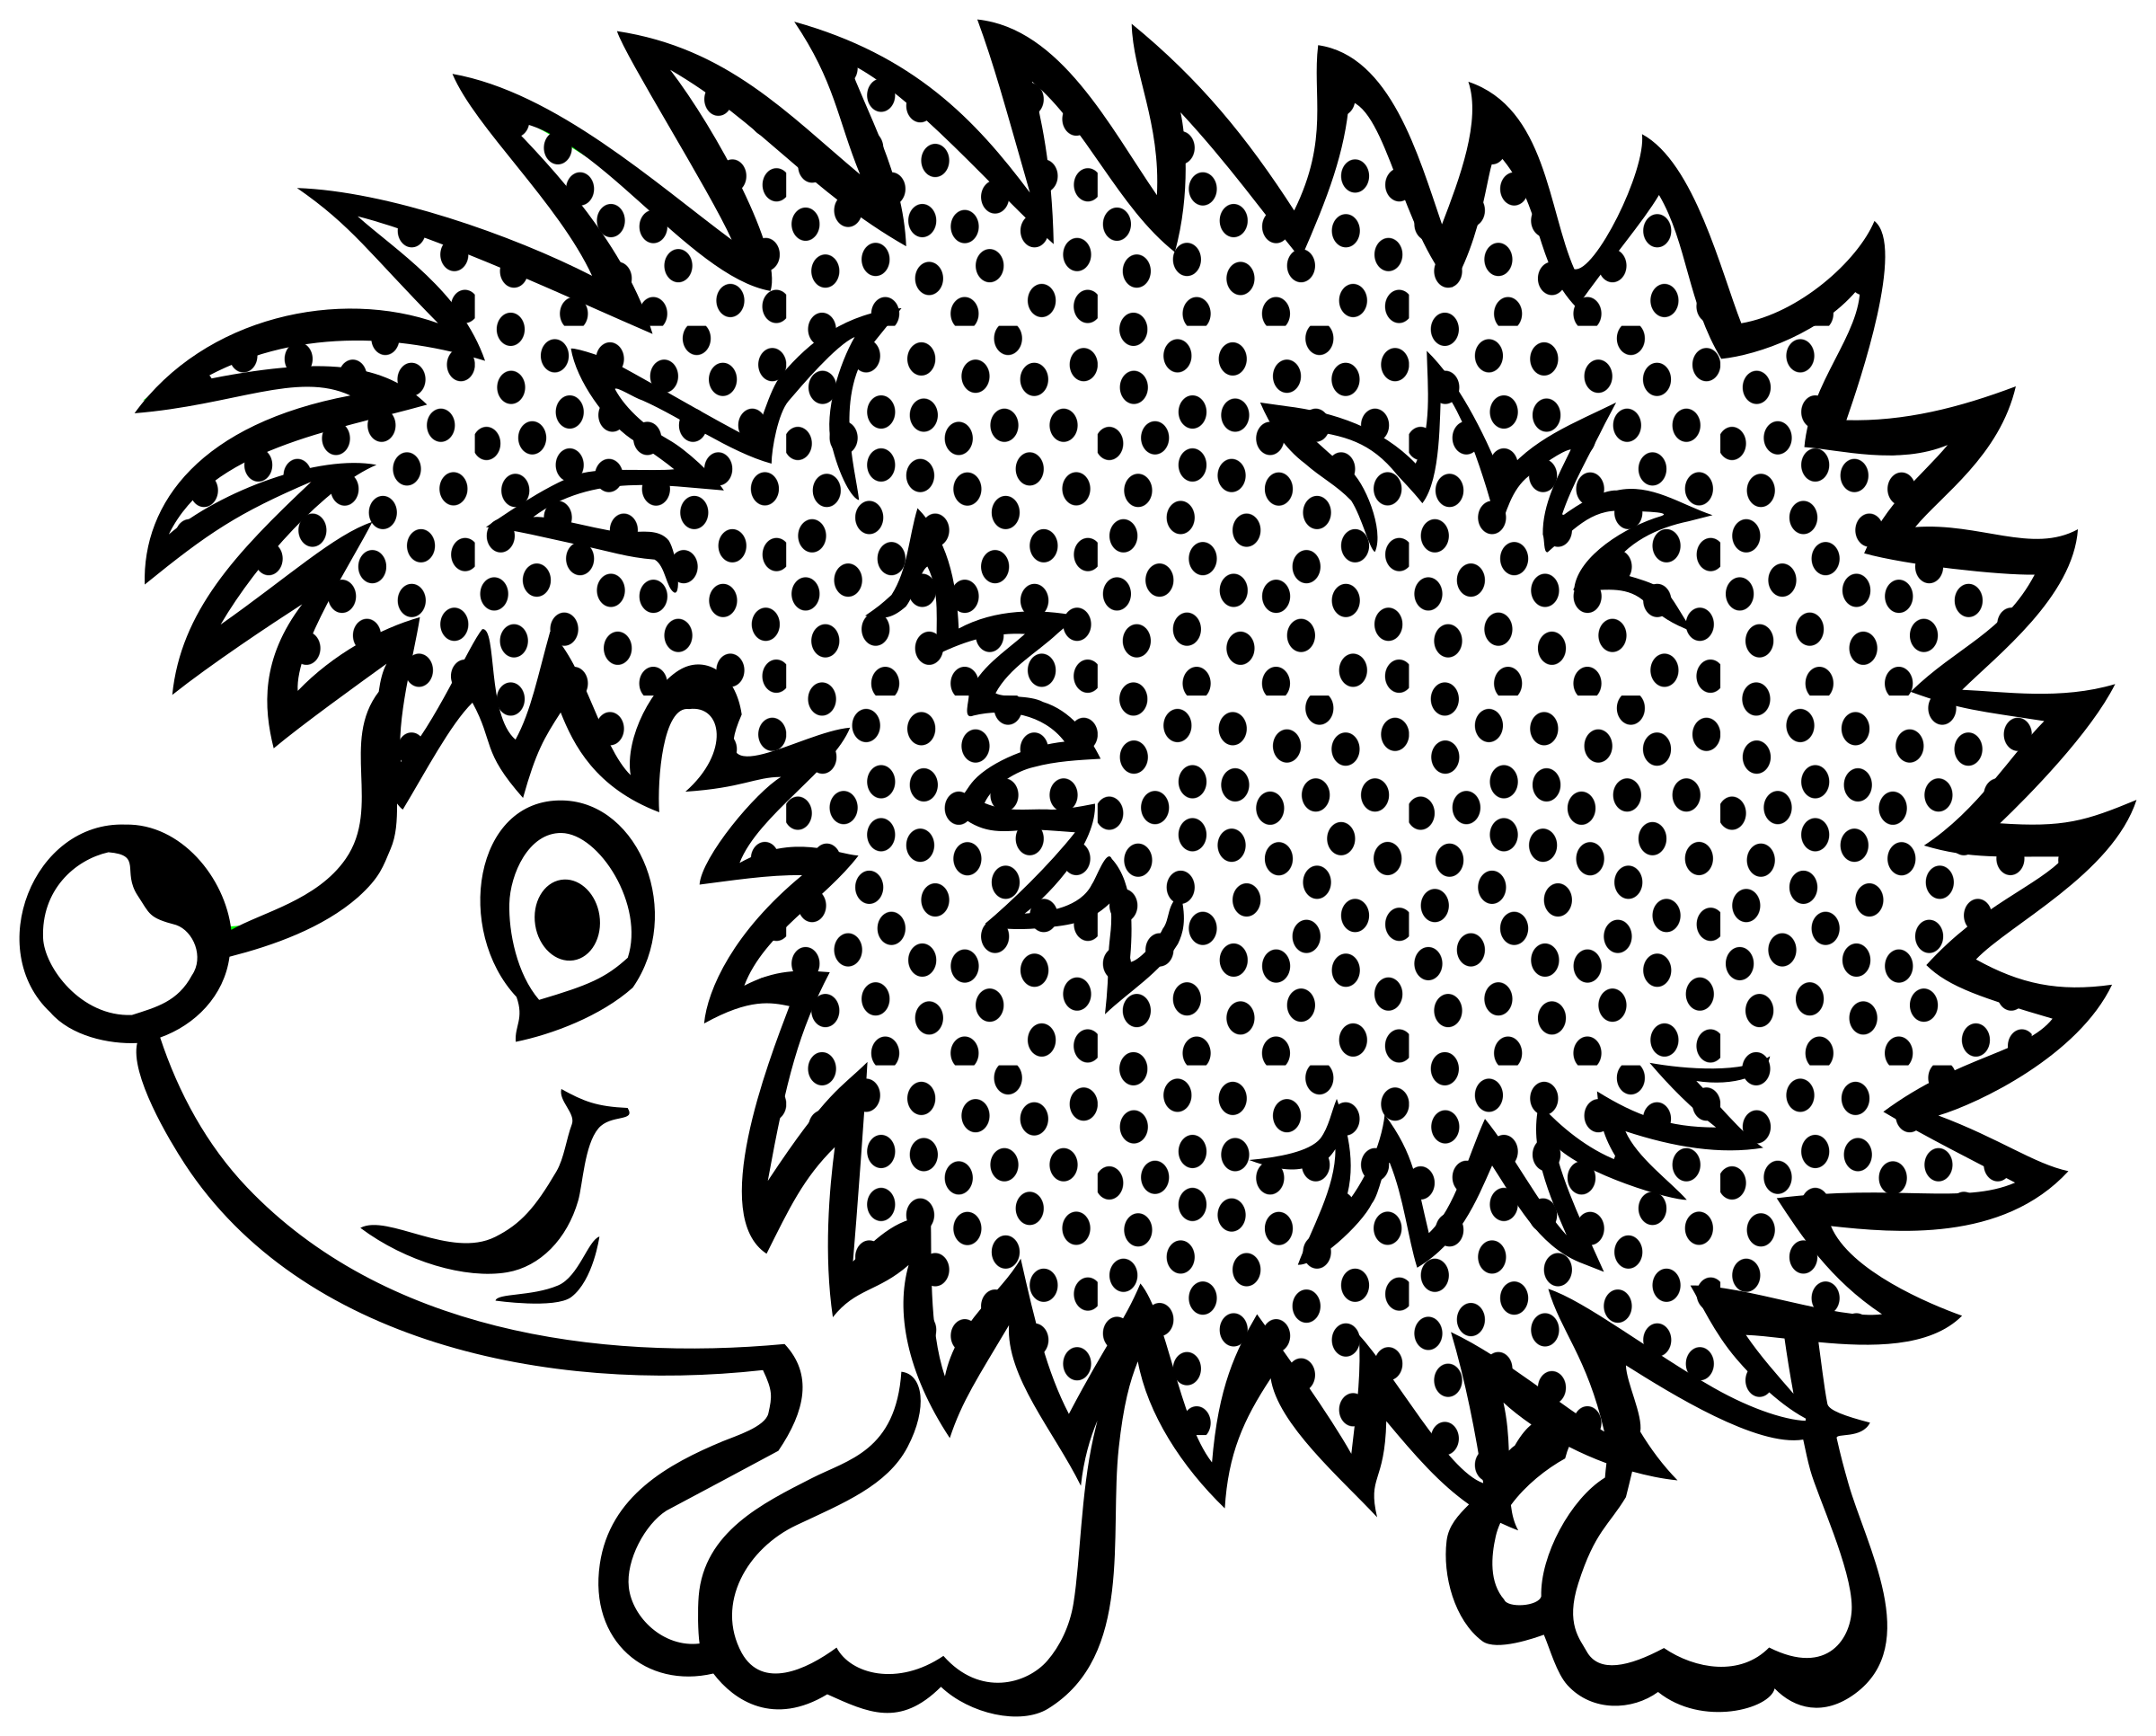 Big Image (Png) - Hedgehog Black And White, Transparent background PNG HD thumbnail